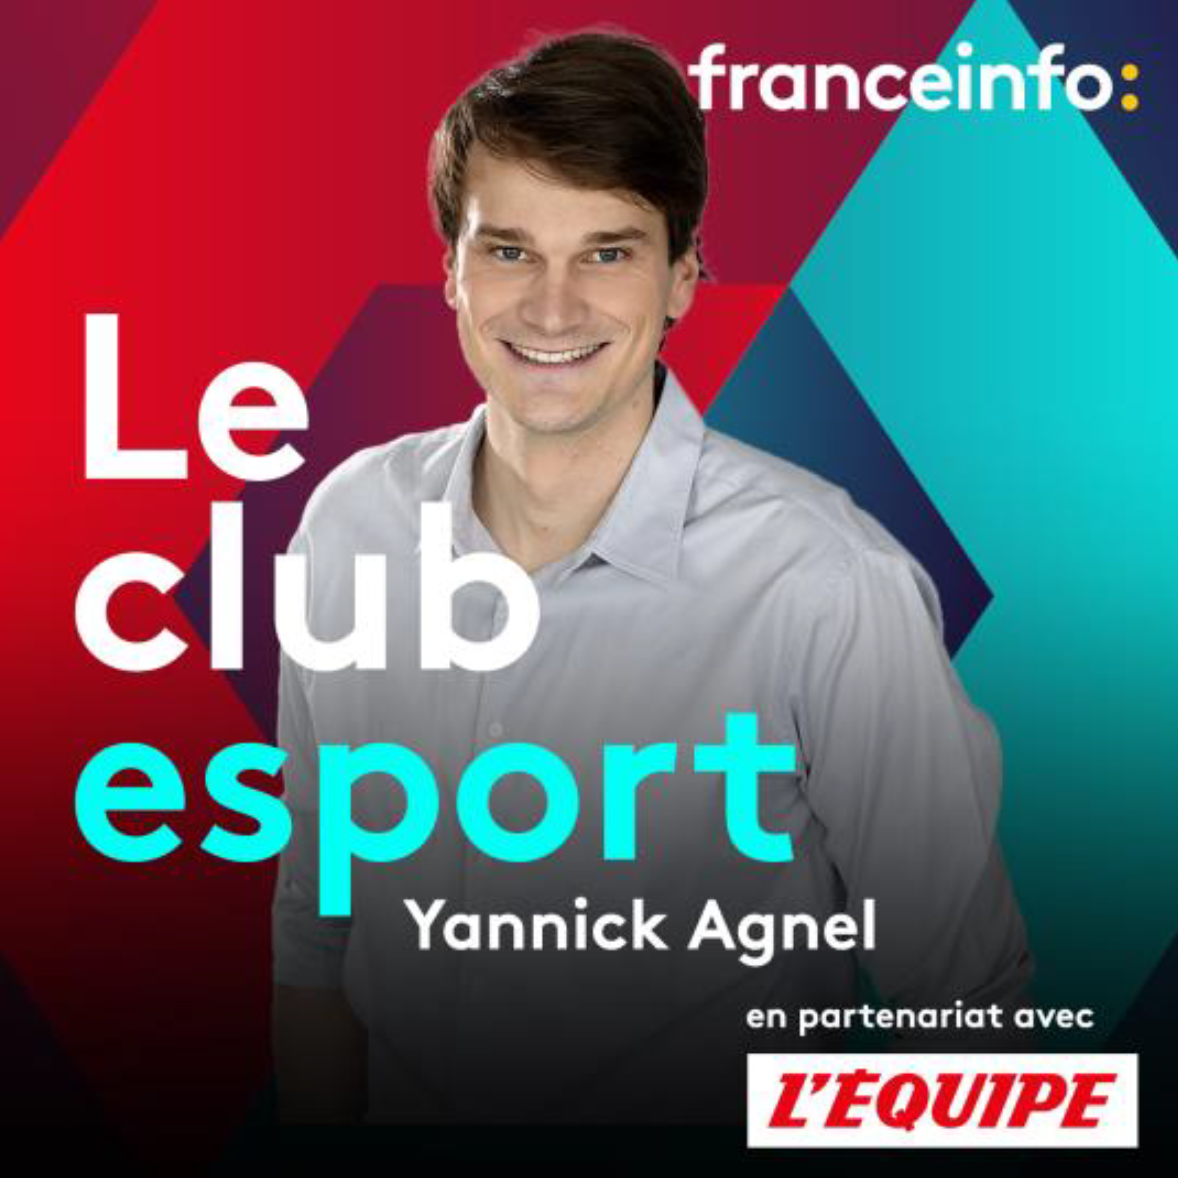 "Le club esport" : nouveau podcast original franceinfo